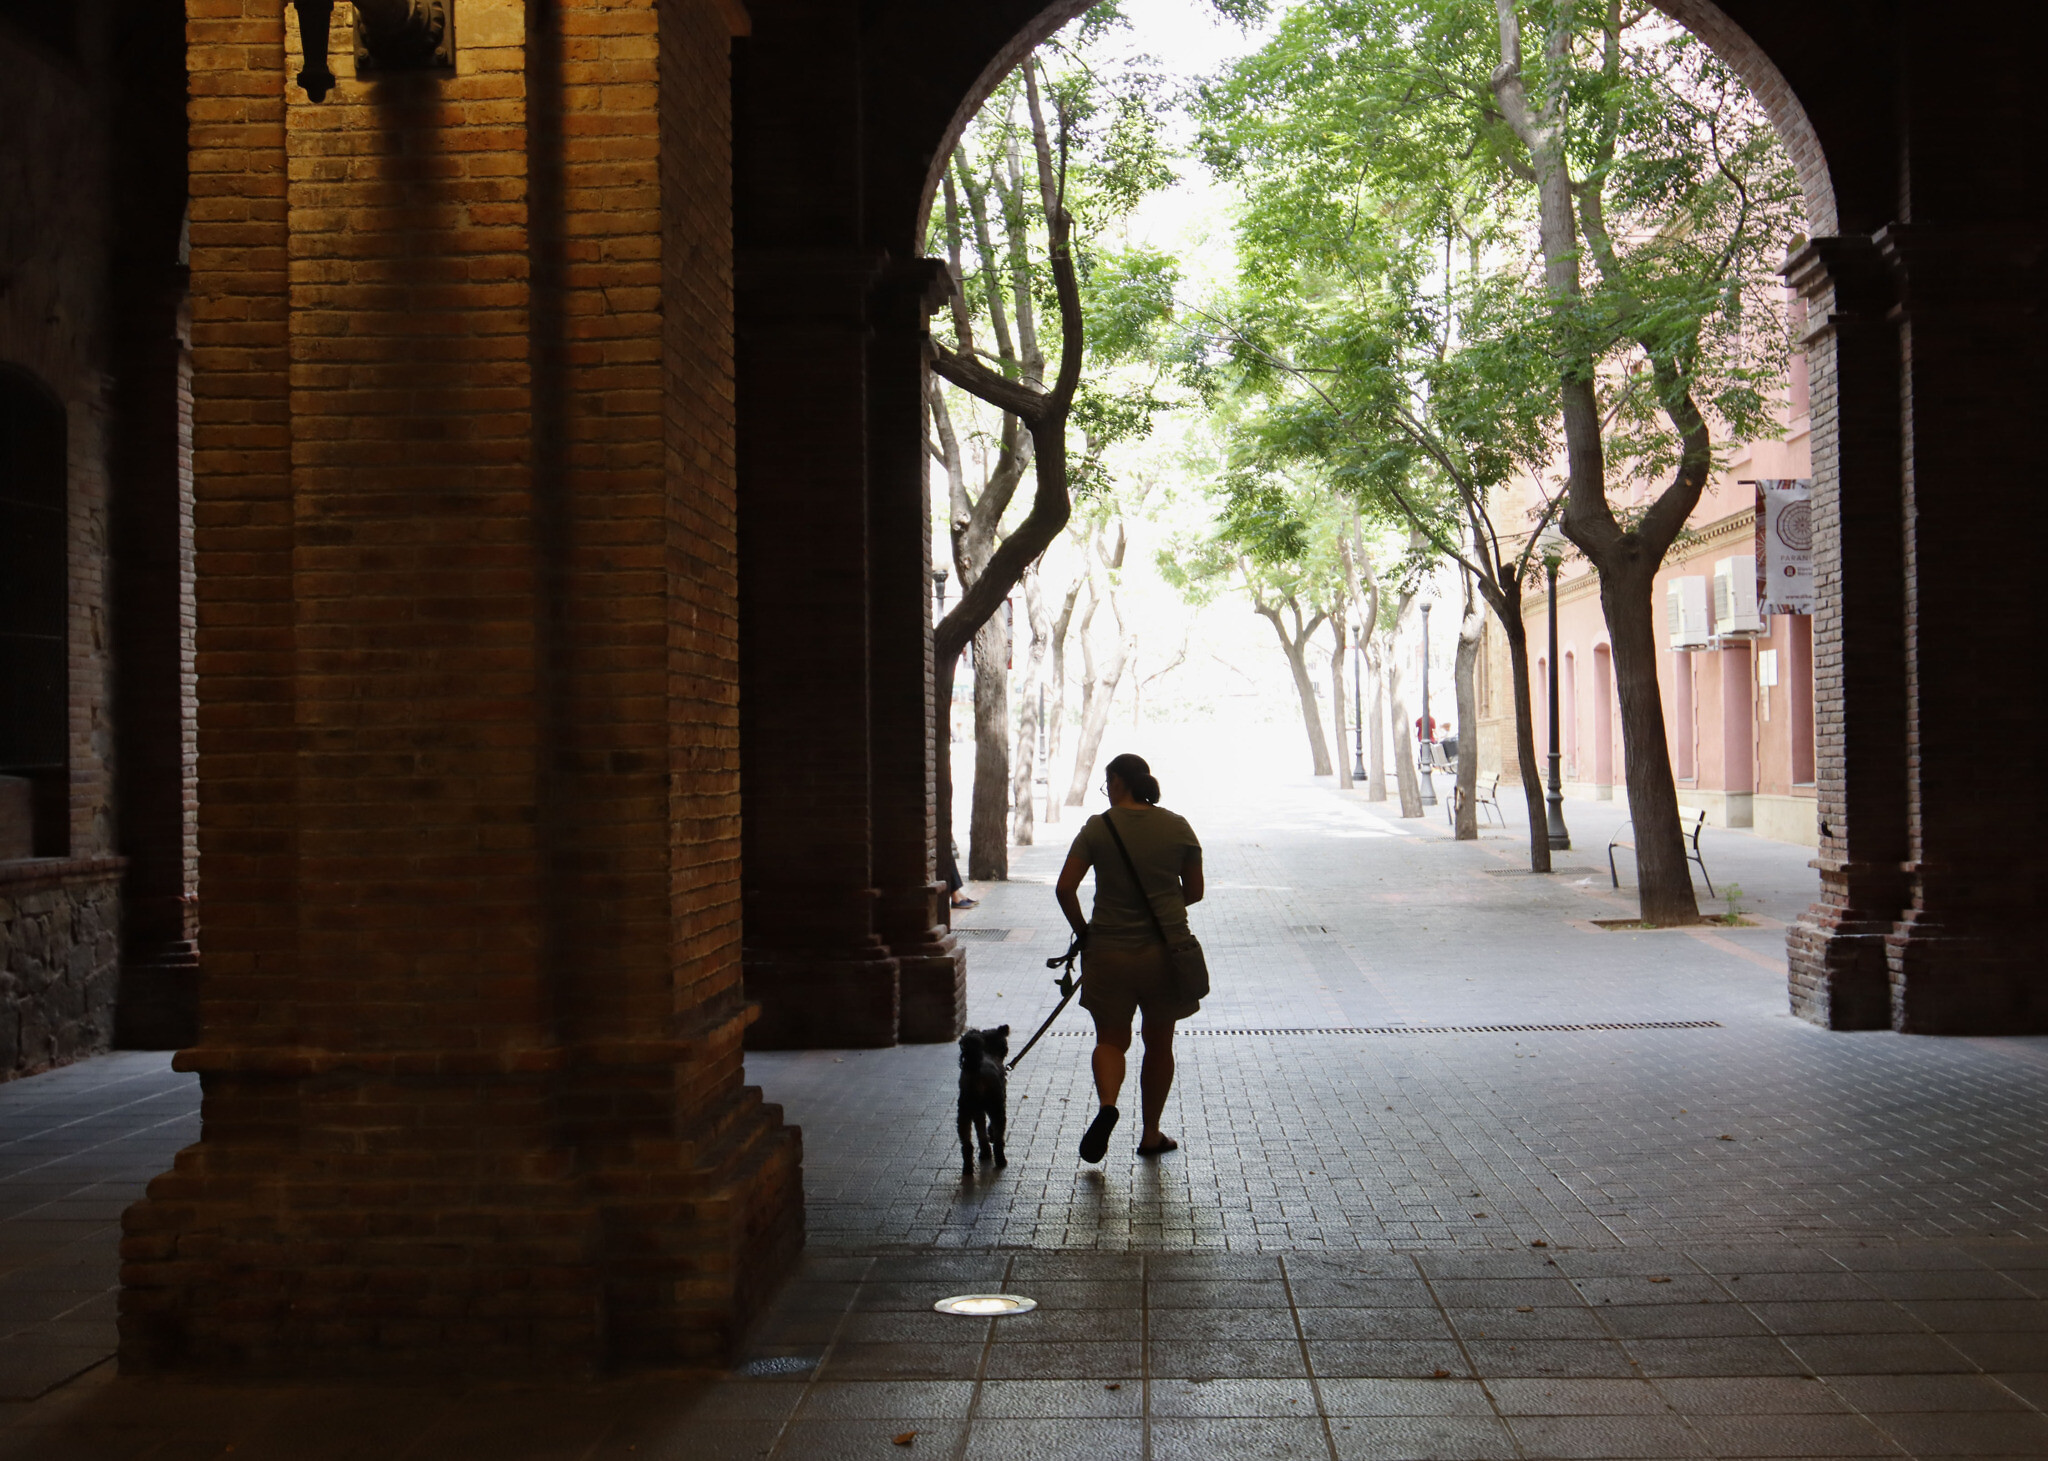 Julie Bronder walks through her neighborhood with her dog Koval in Barcelona, Spain, on June 20, 2022. (Raquel G. Frohlich)